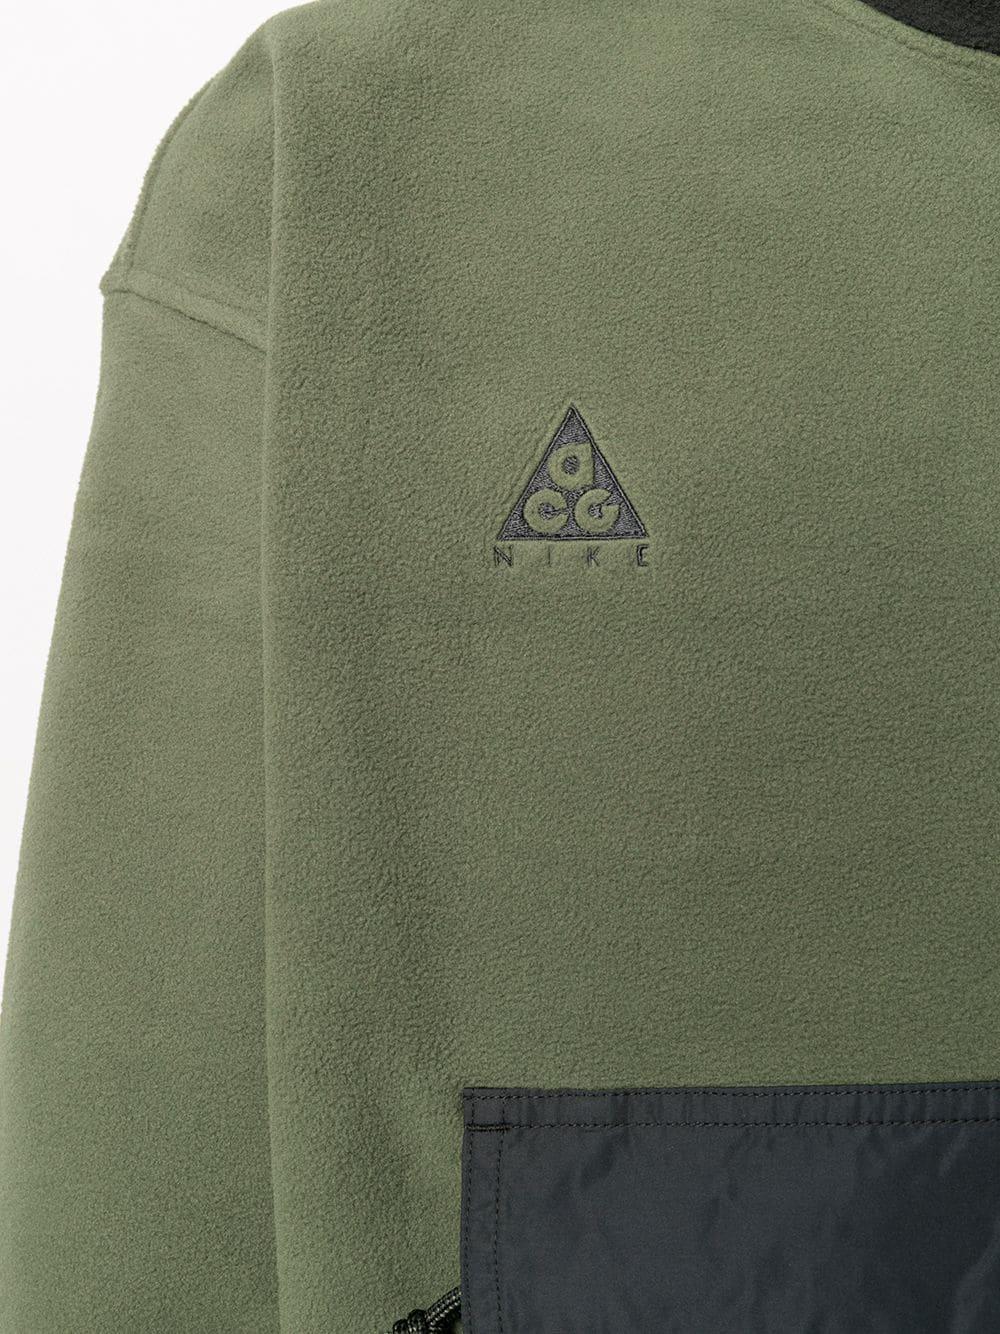 Nike Fleece Acg Polar Sweater in Green for Men - Lyst